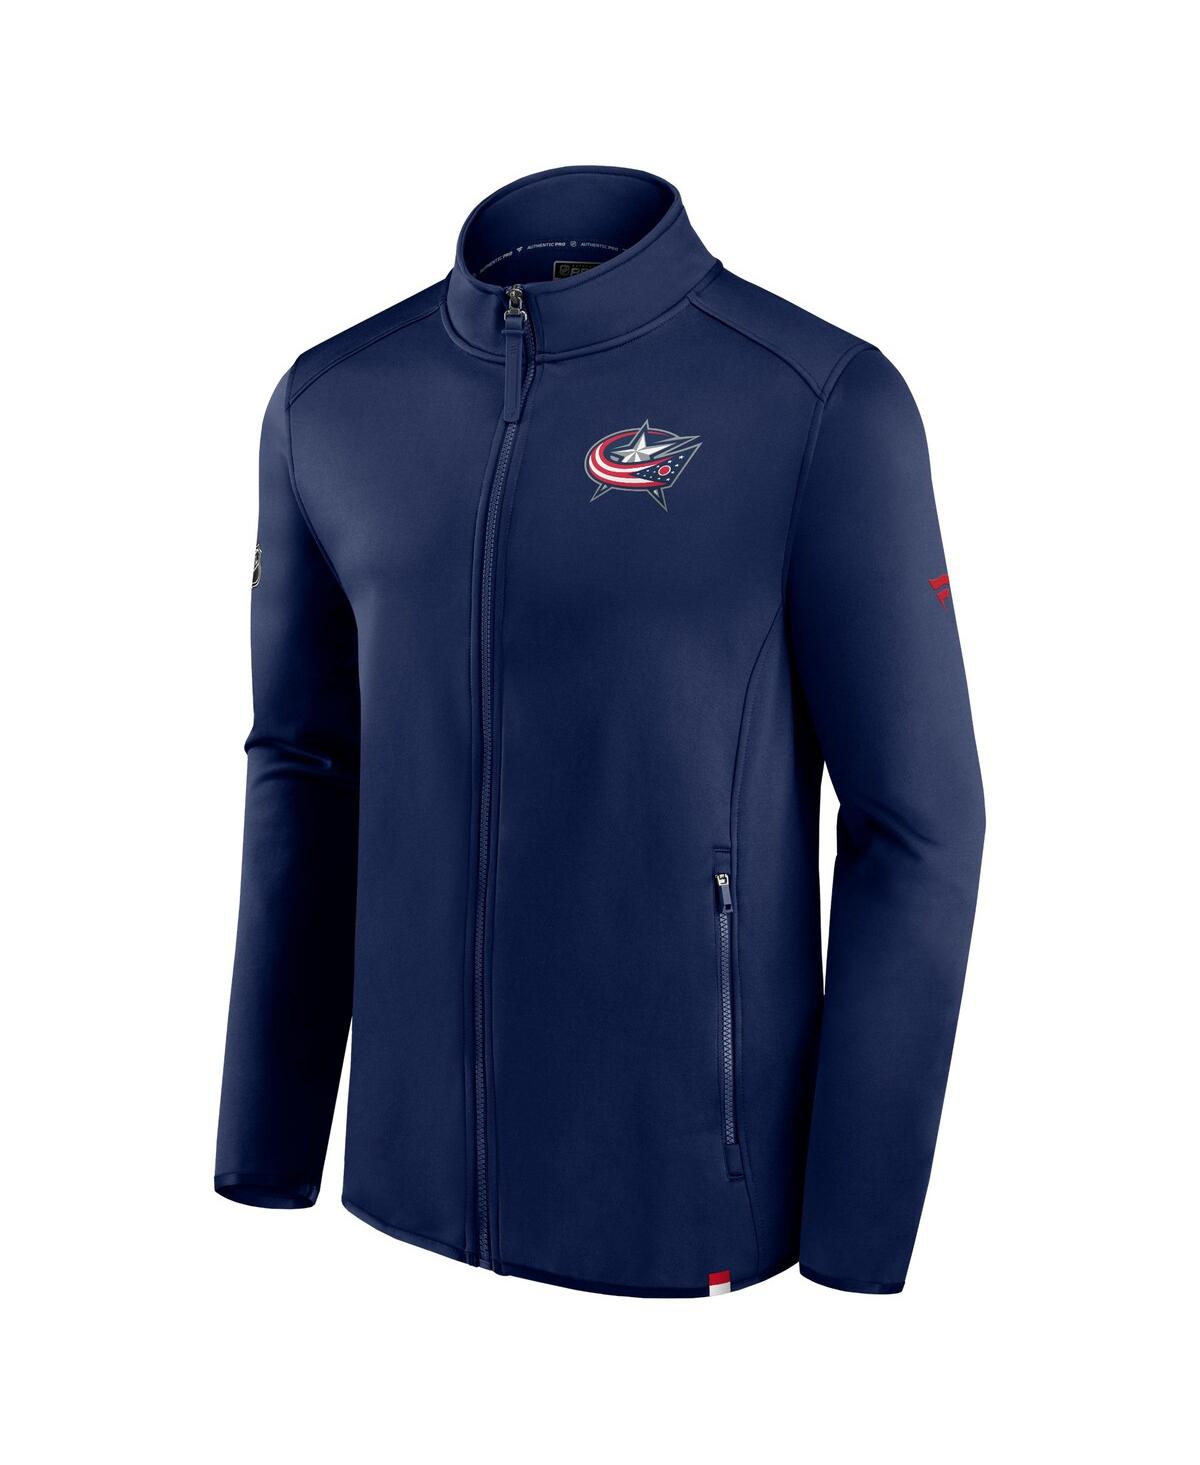 Shop Fanatics Men's  Navy Columbus Blue Jackets Authentic Pro Full-zip Jacket